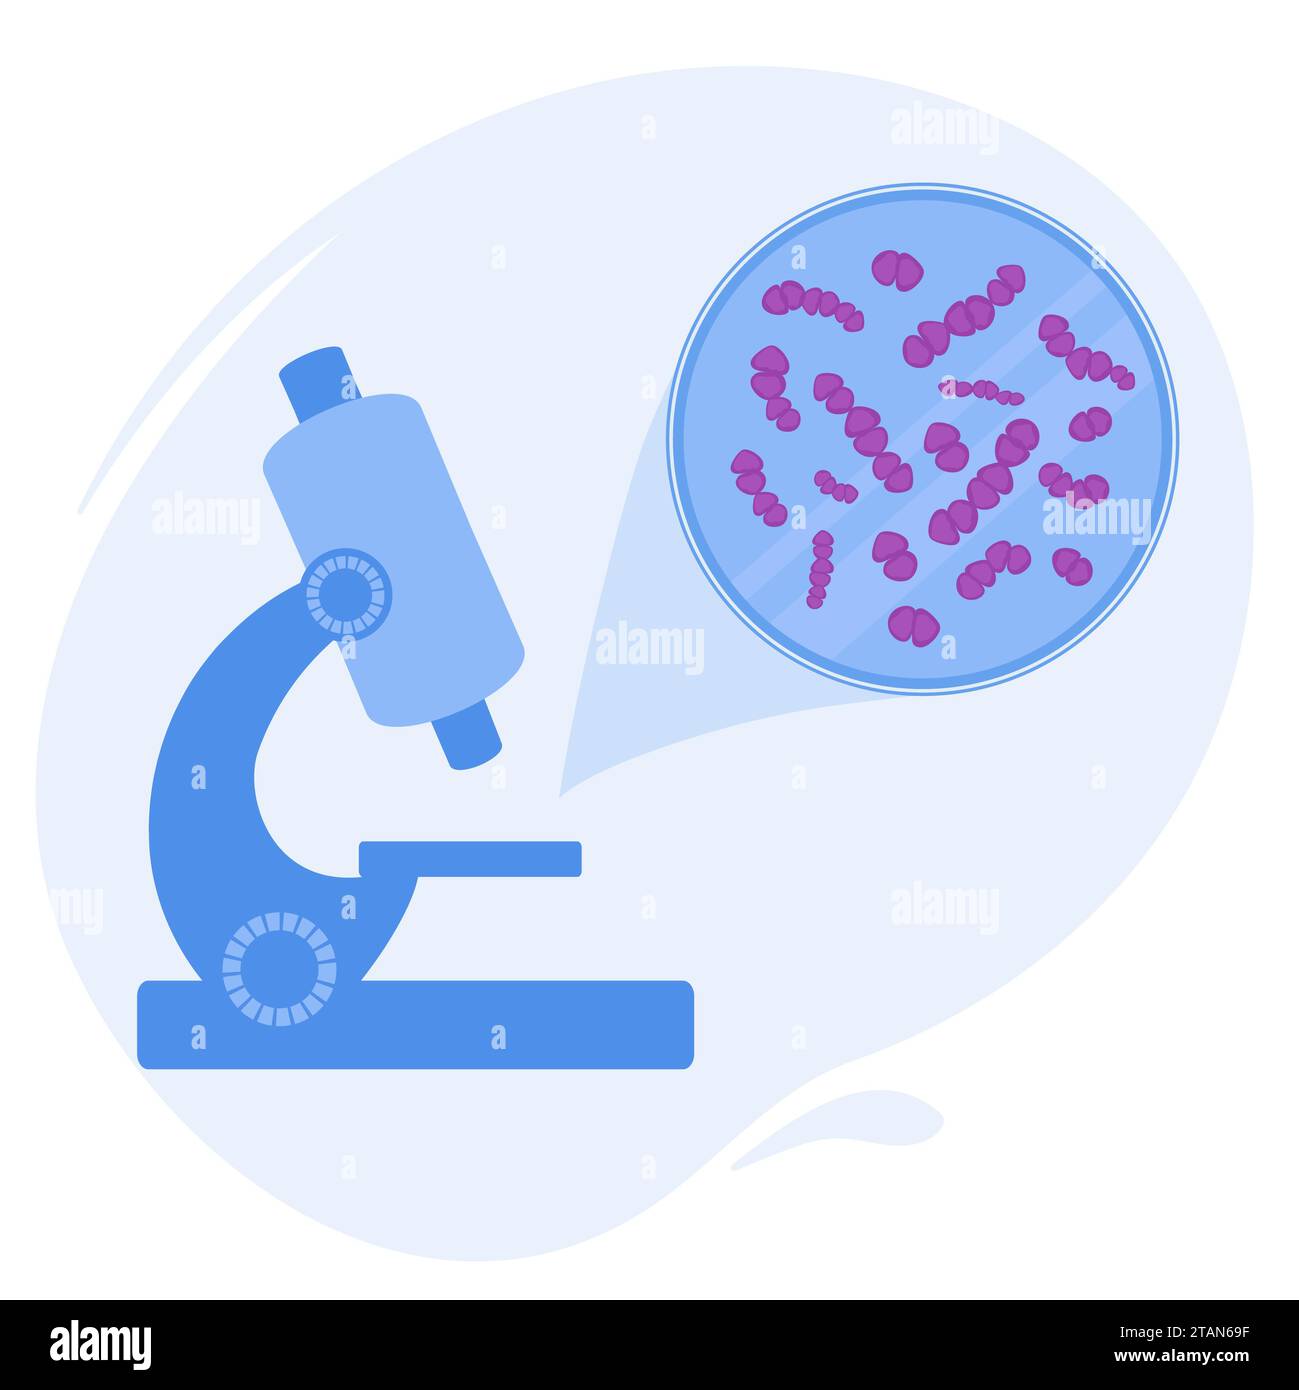 Streptococcus bacteria, conceptual illustration Stock Photo